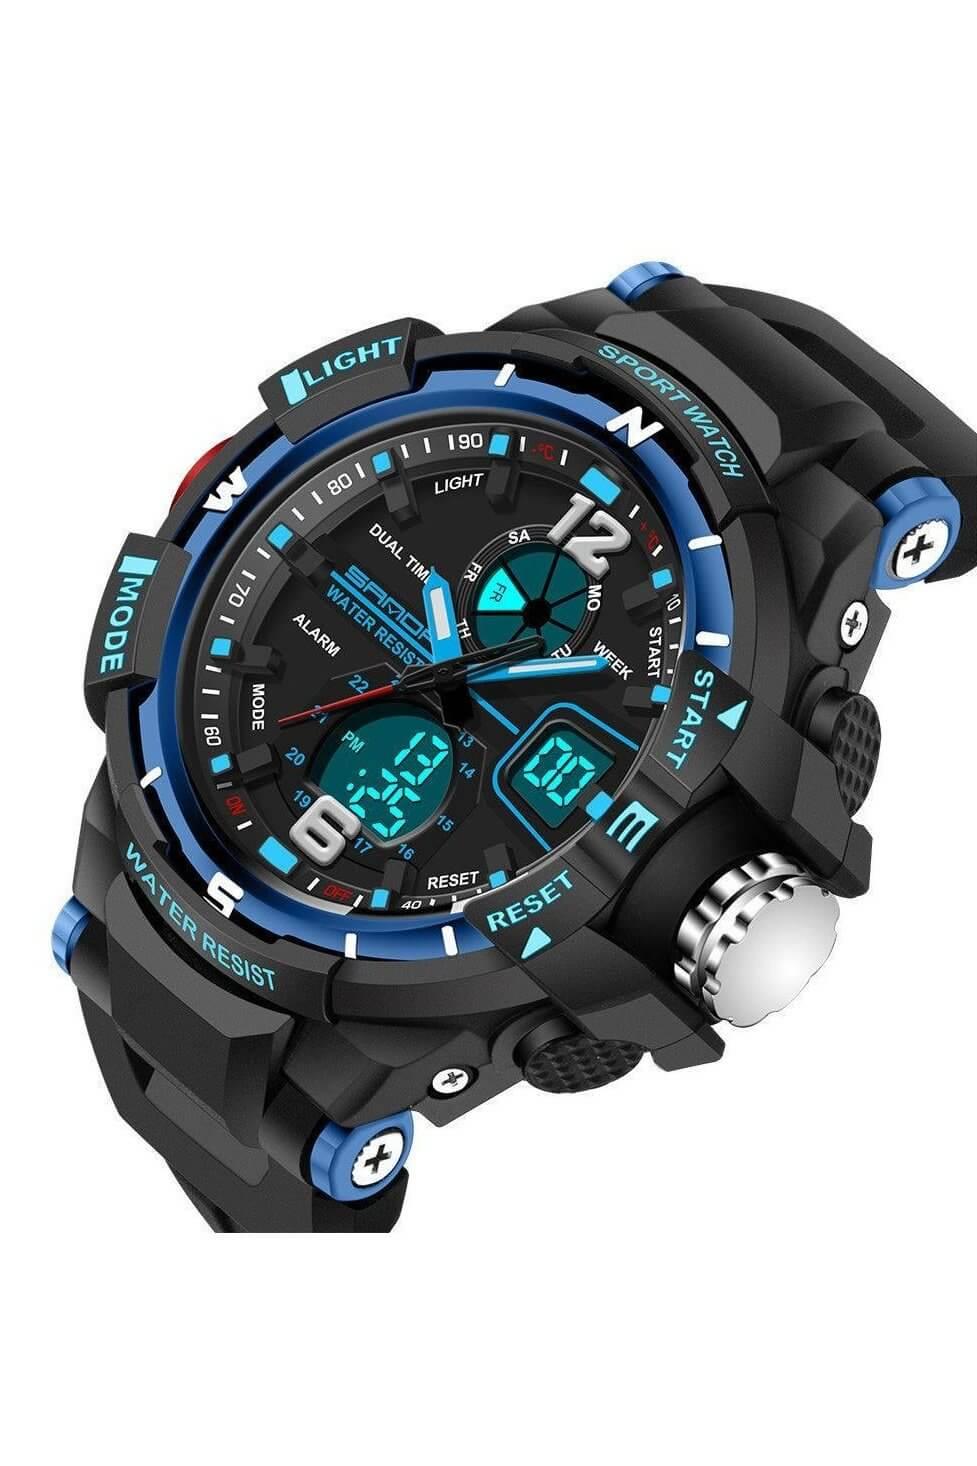 Men's Waterproof Sports Electronic Watch - Trendociti